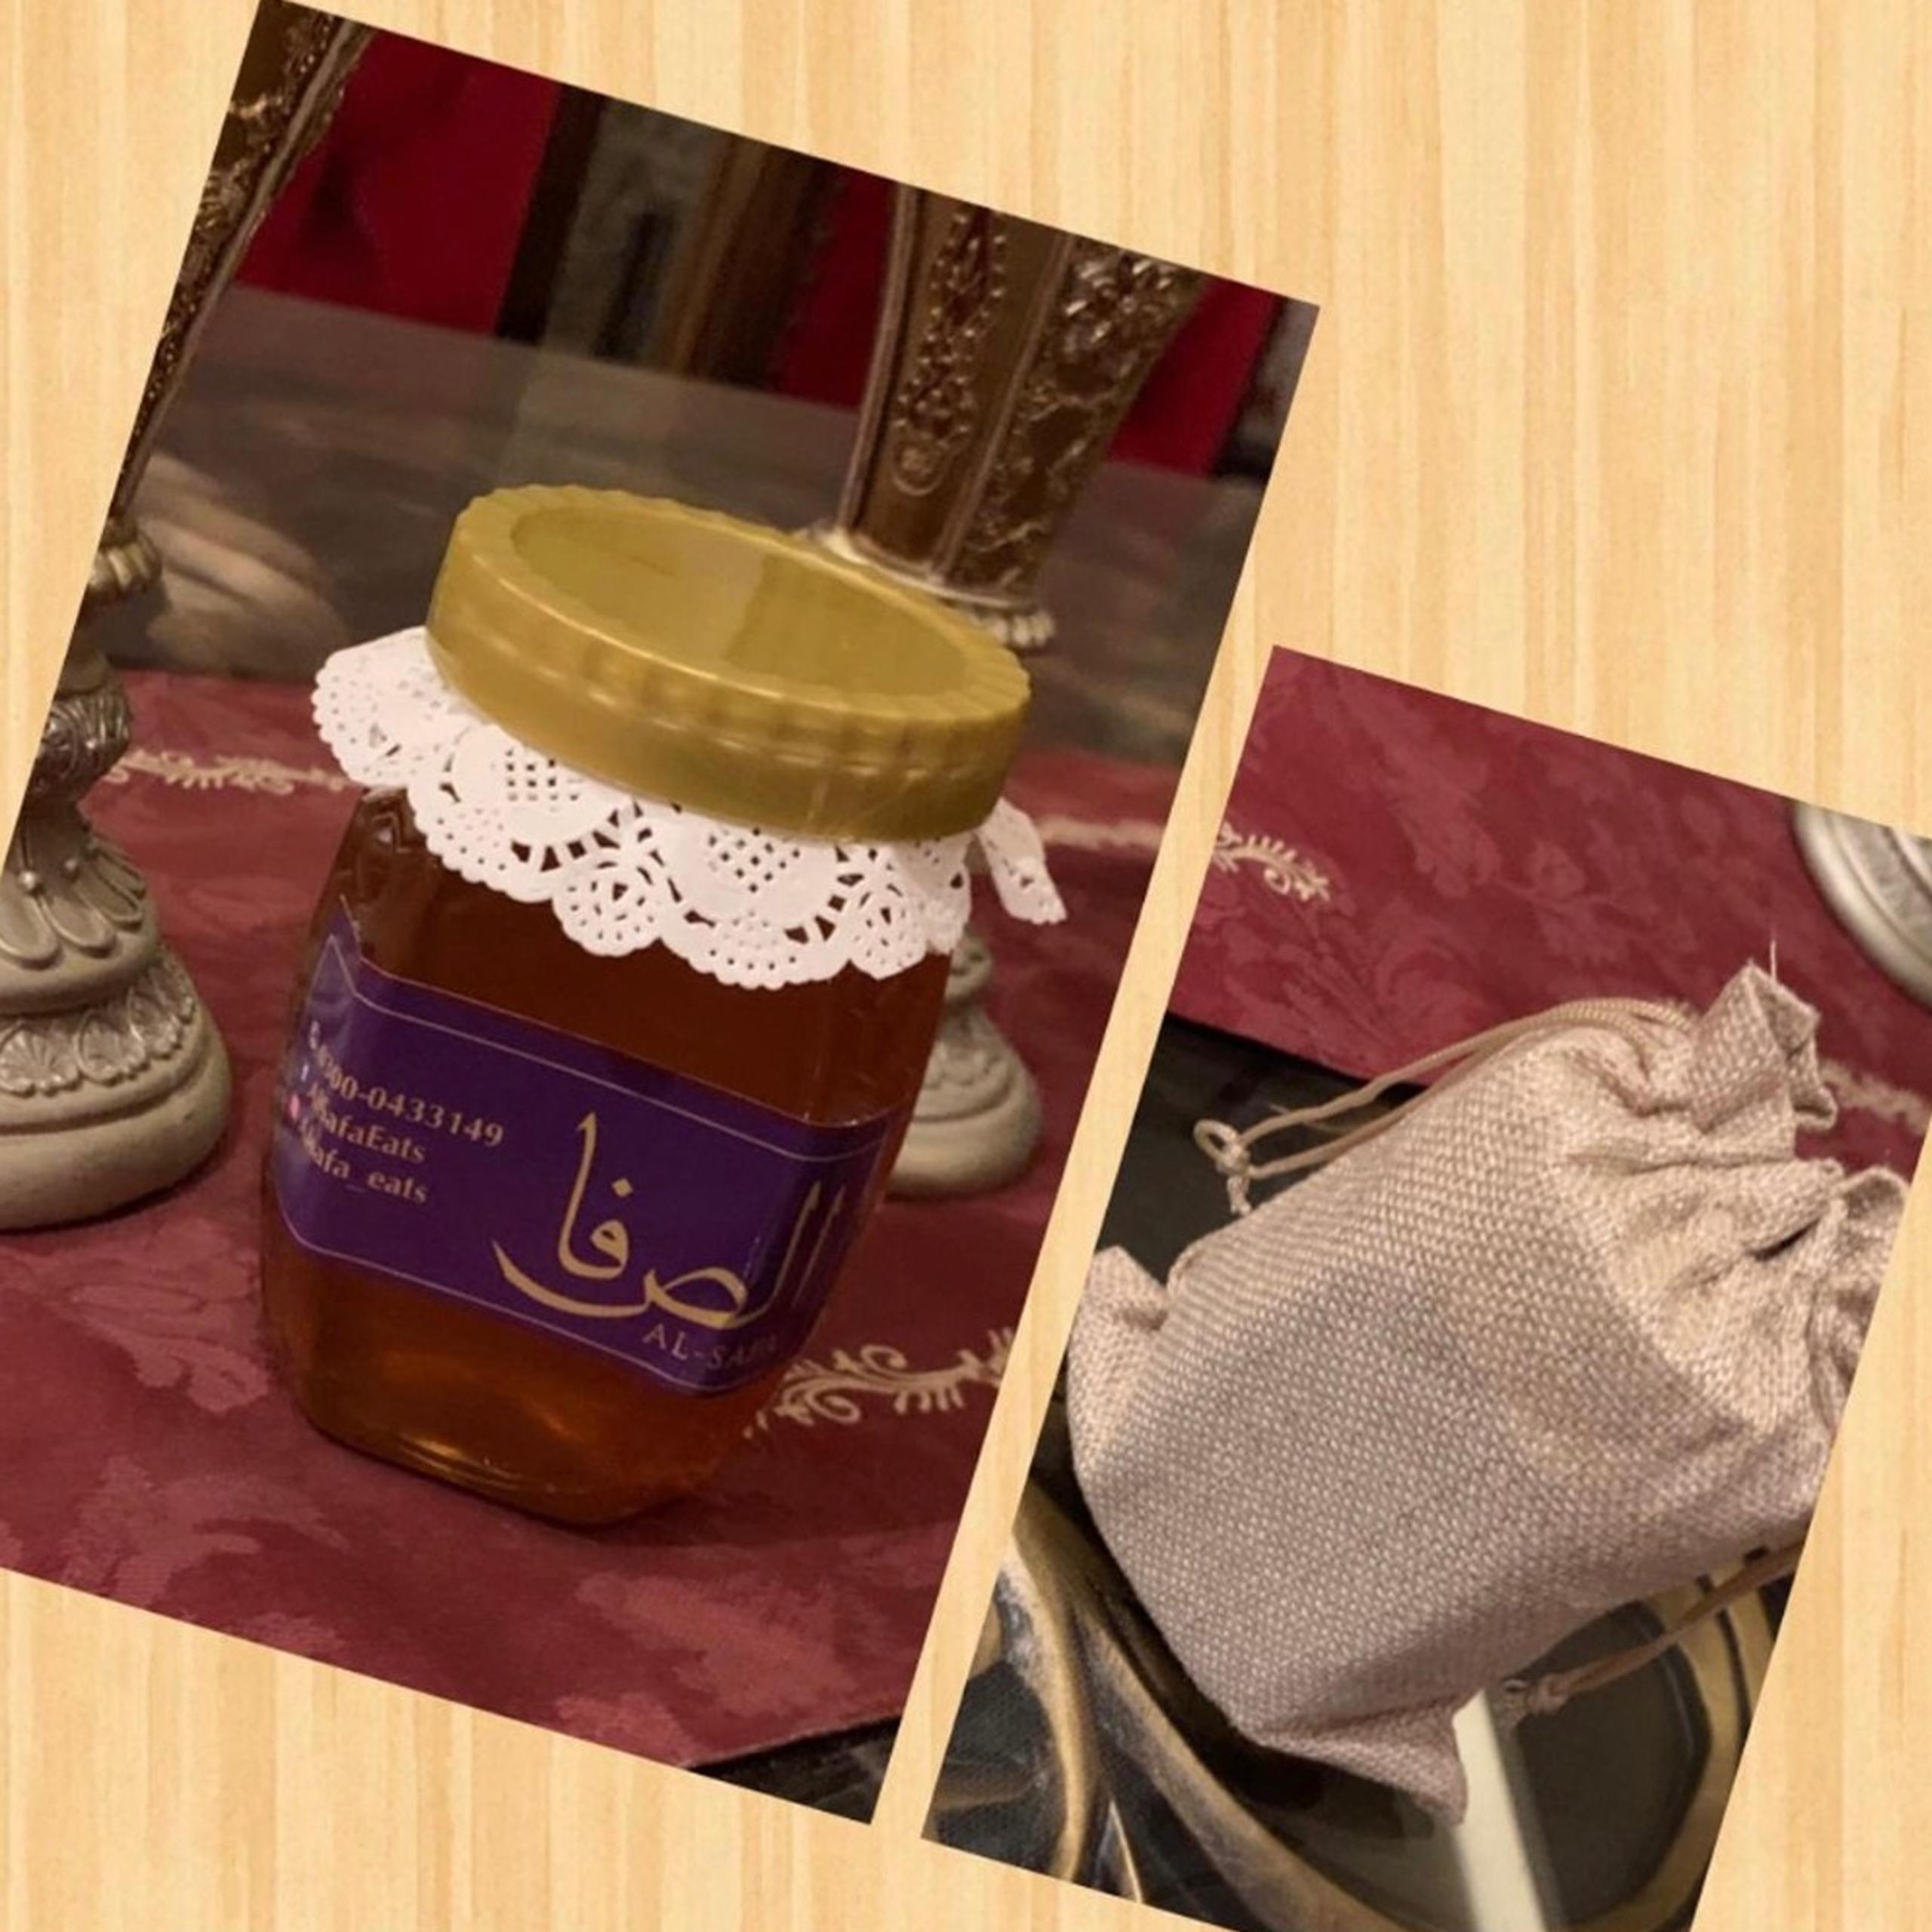 AlSafa palusa honey 1/2 kg Rs 690 or Buy 1 kg for Rs 1300 only